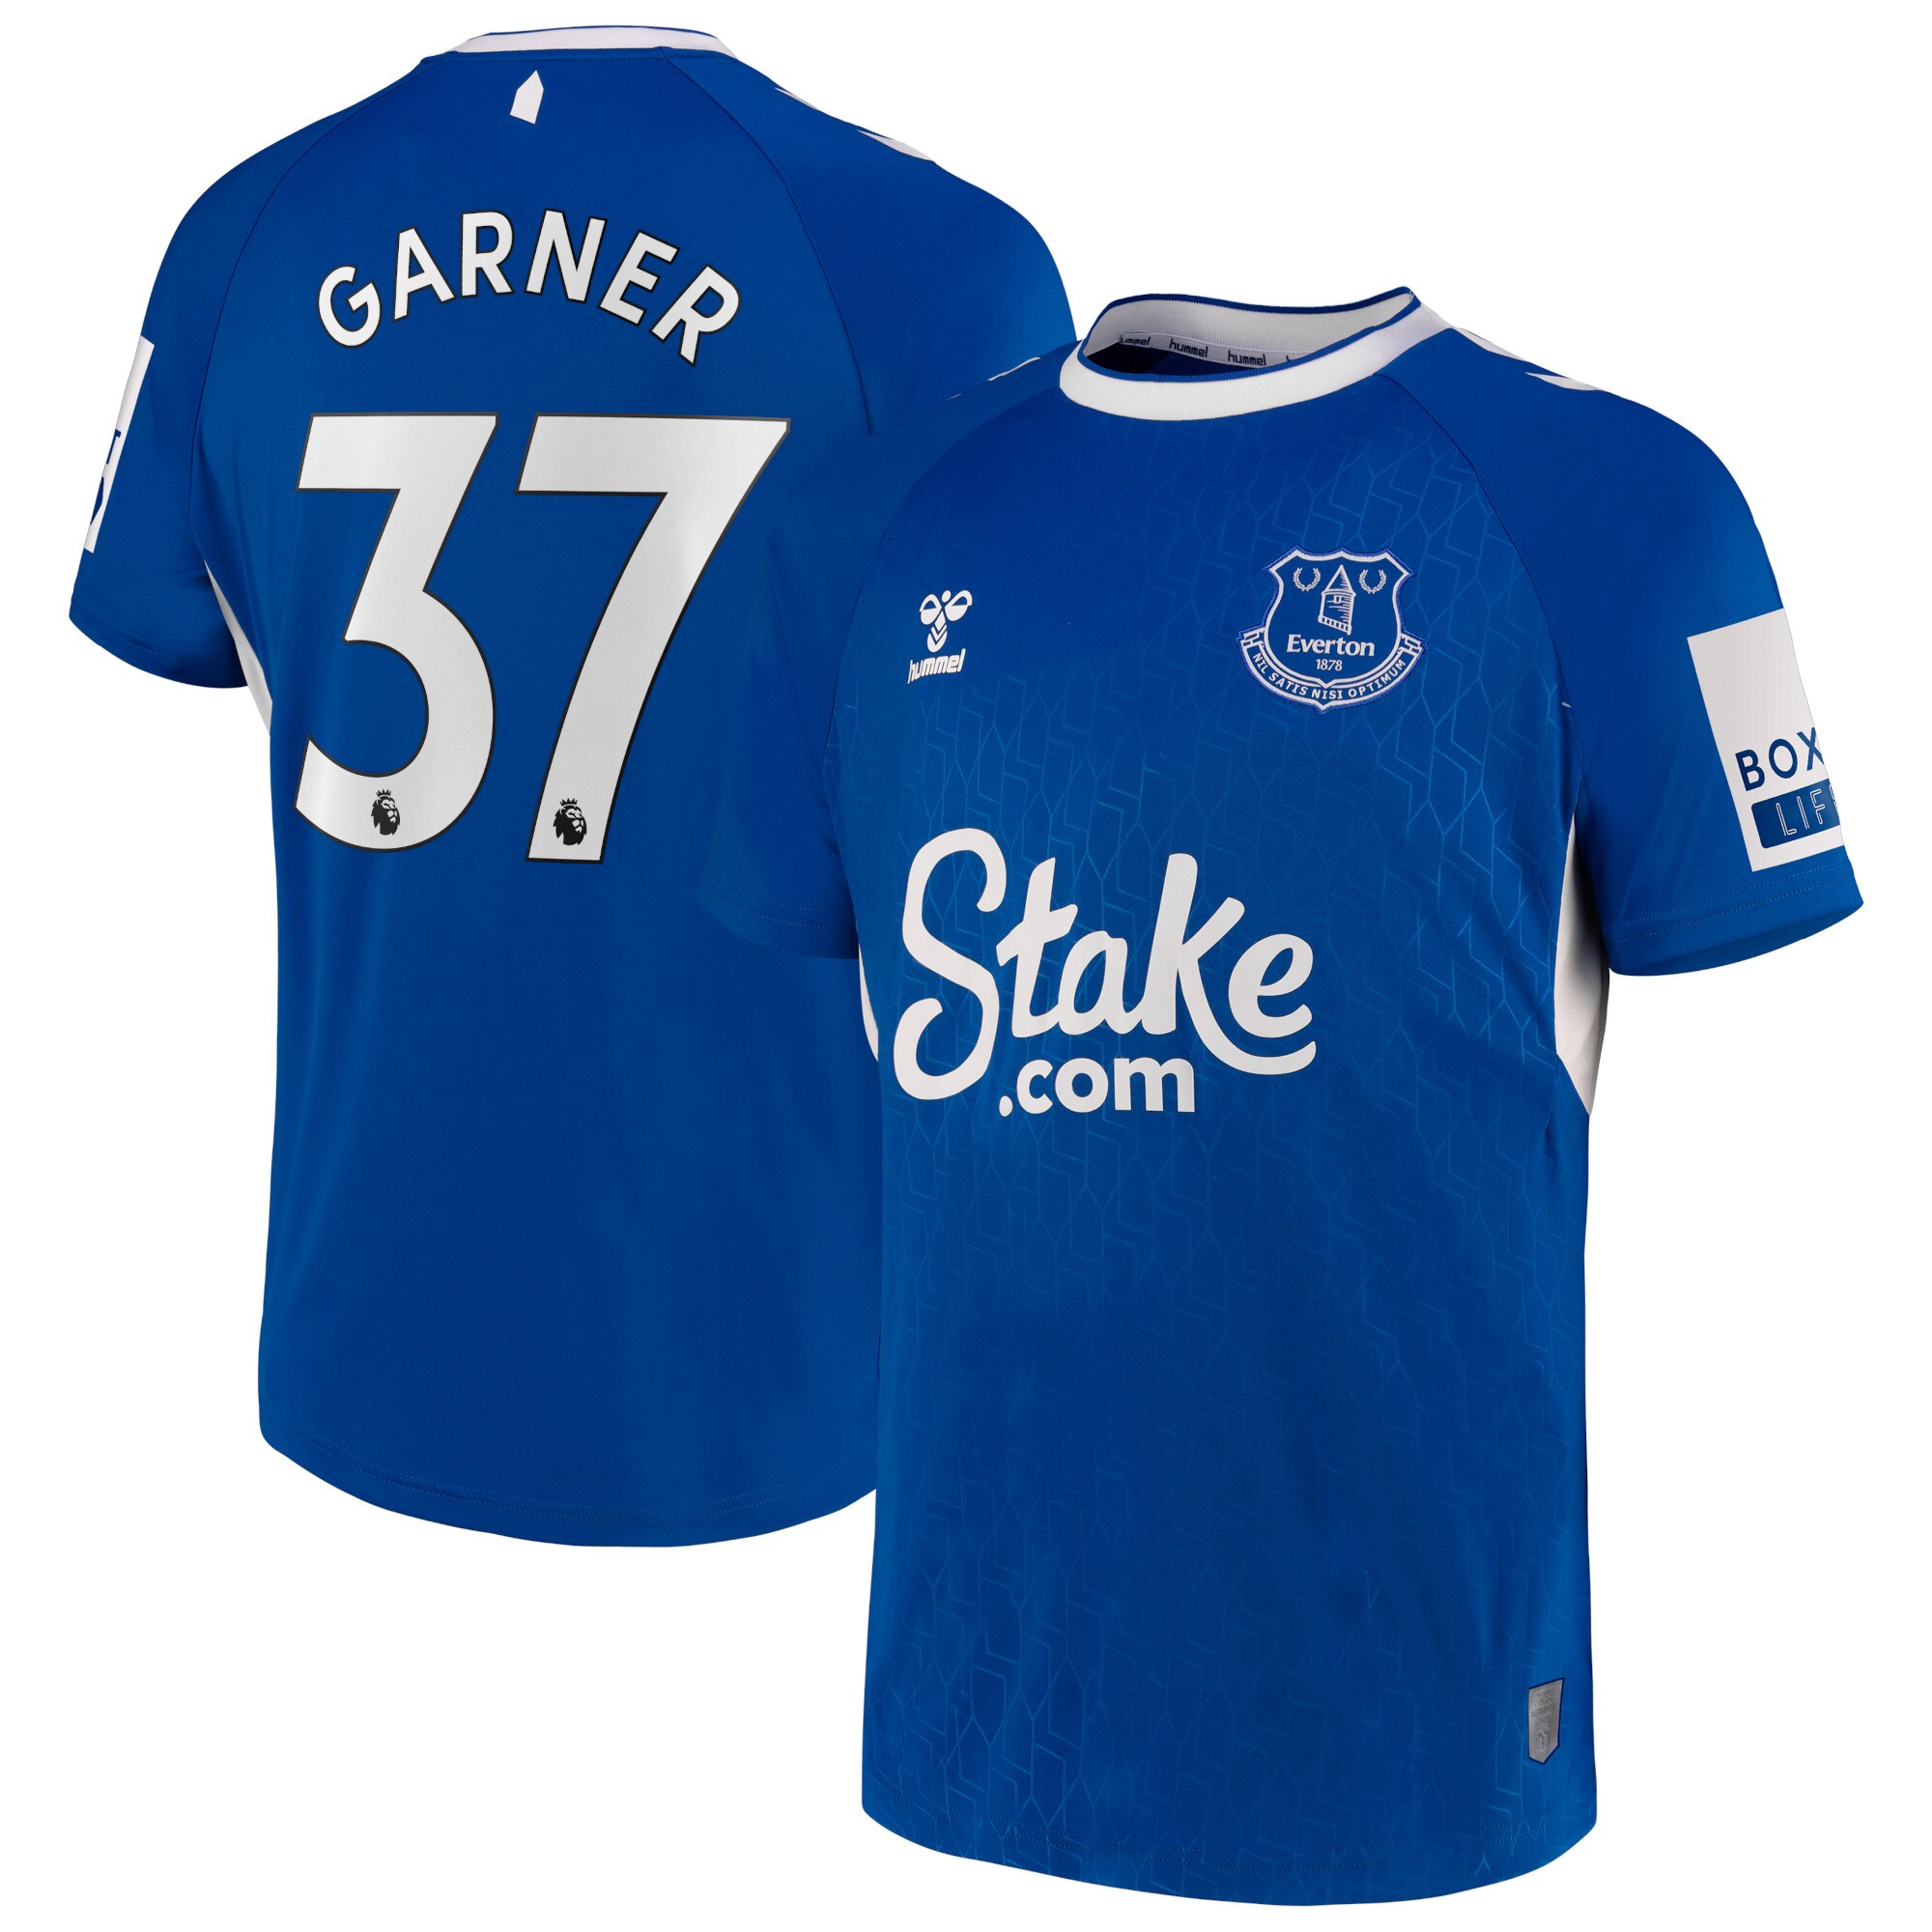 Everton Home Shirt 2022-23 with Garner 37 printing